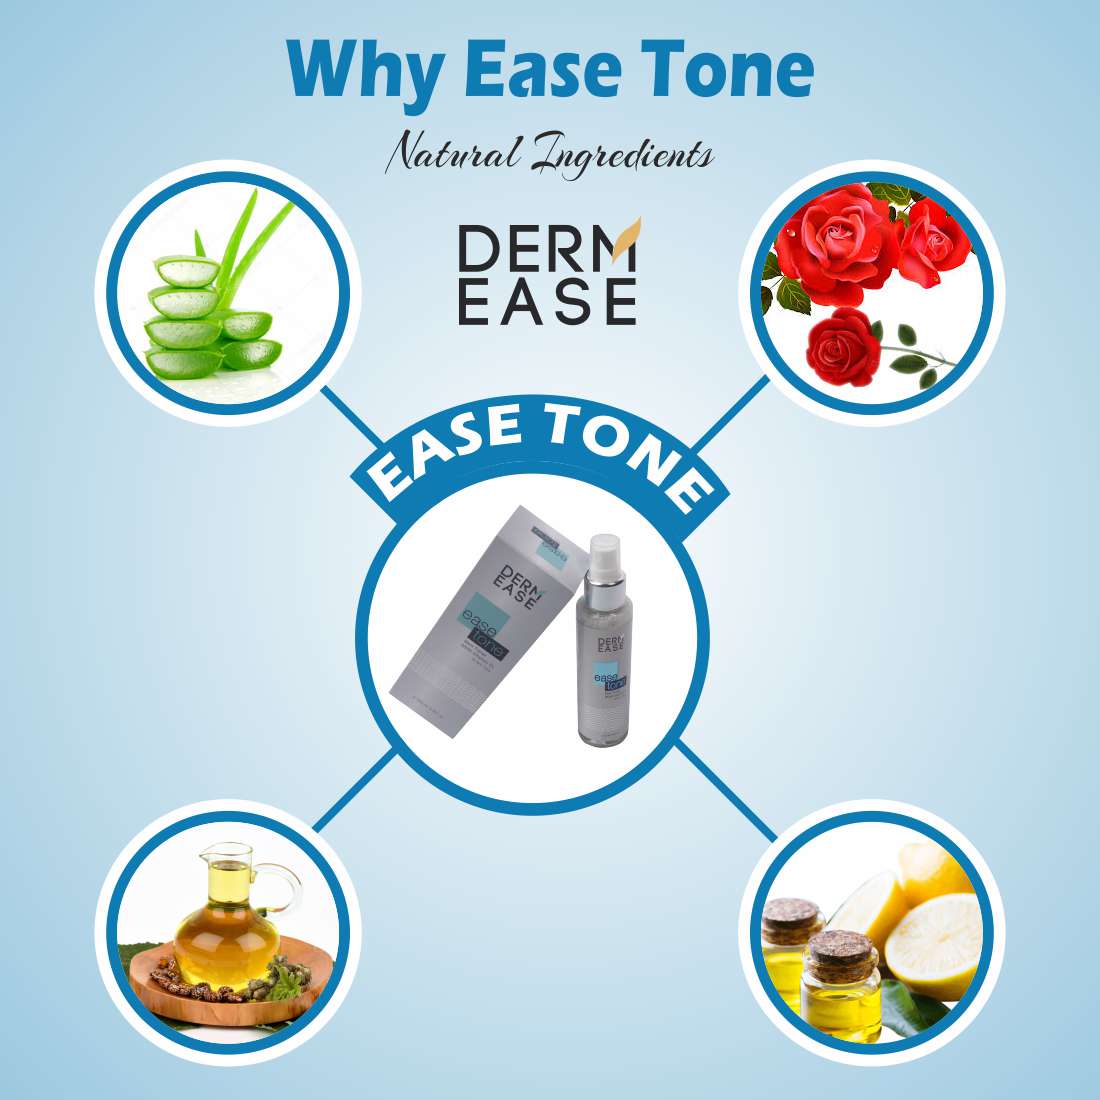 DERM EASE Ease Tone Skin Toner